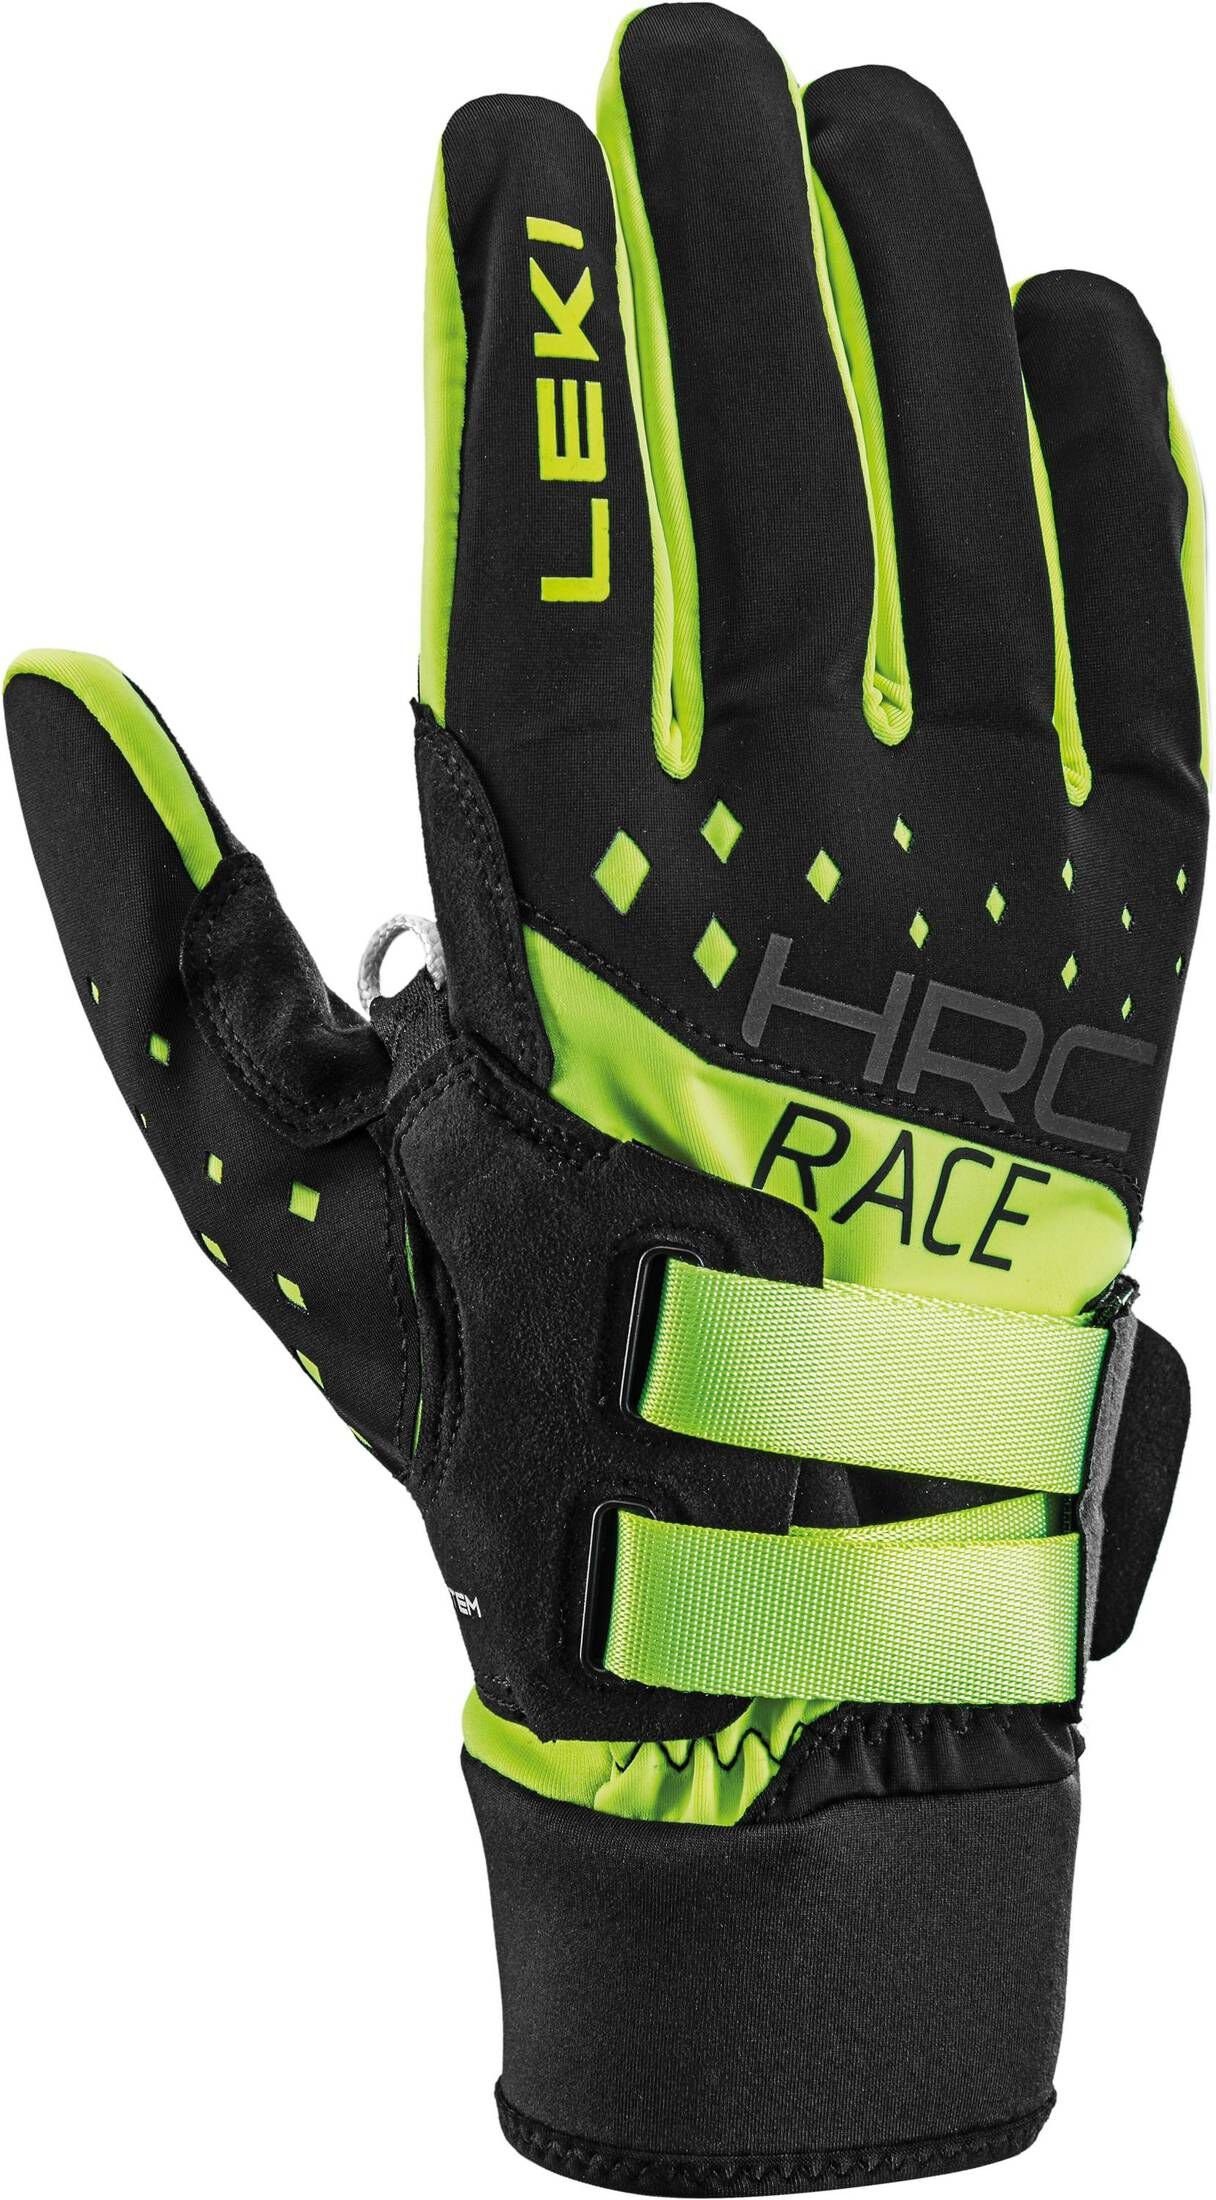 Leki Langlaufhandschuhe Herren Langlauf-Handschuhe Black RACE Yellow HRC - Neon SHARK